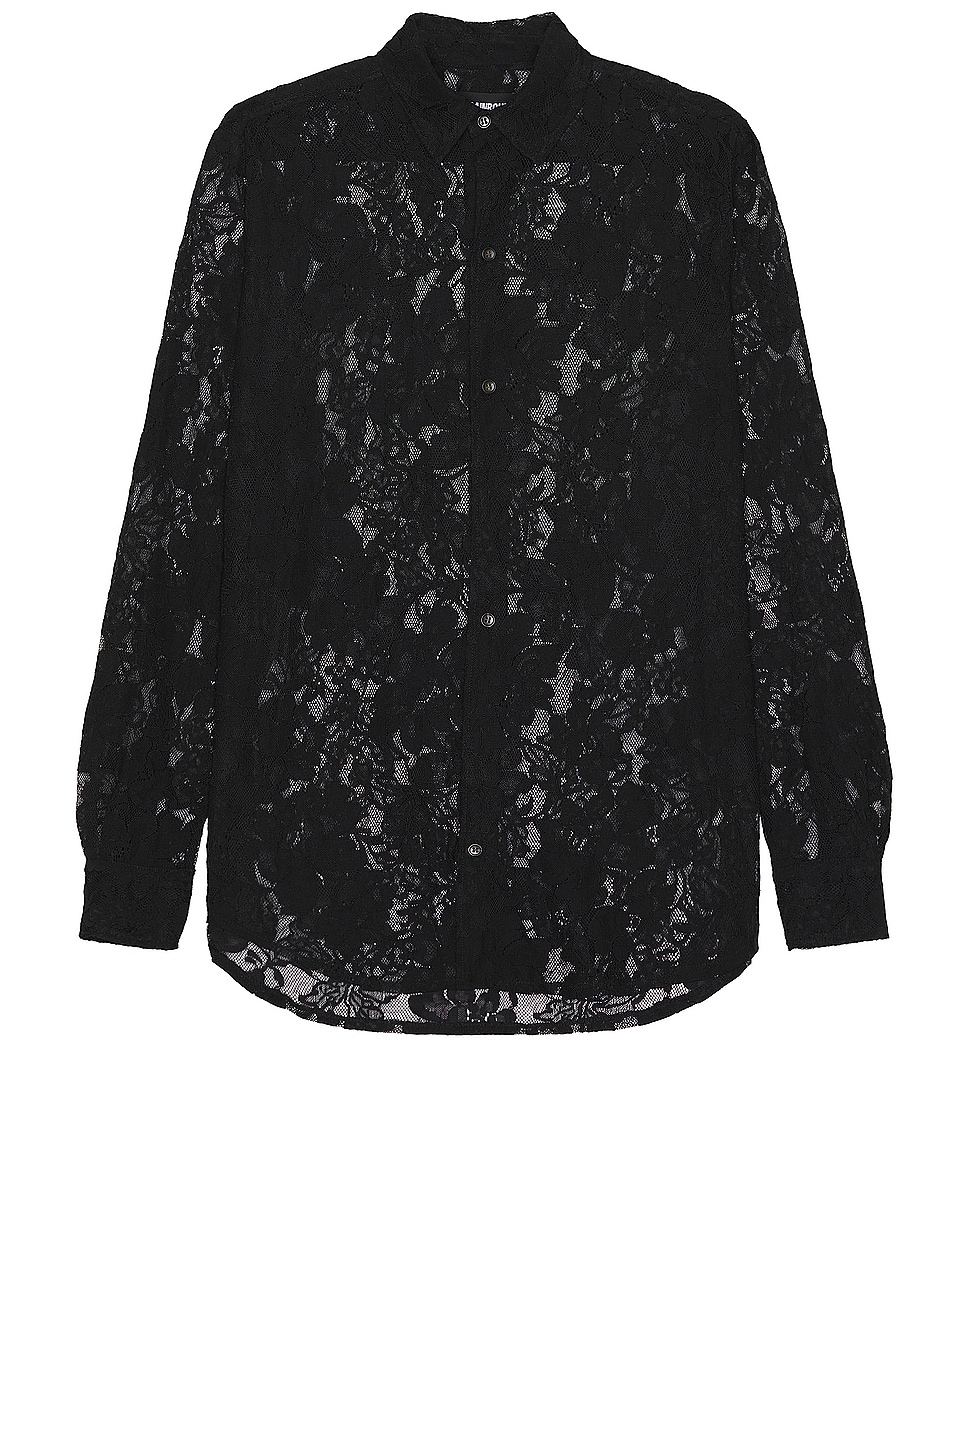 Image 1 of DOUBLE RAINBOUU Sundown Shirt in Black Lace